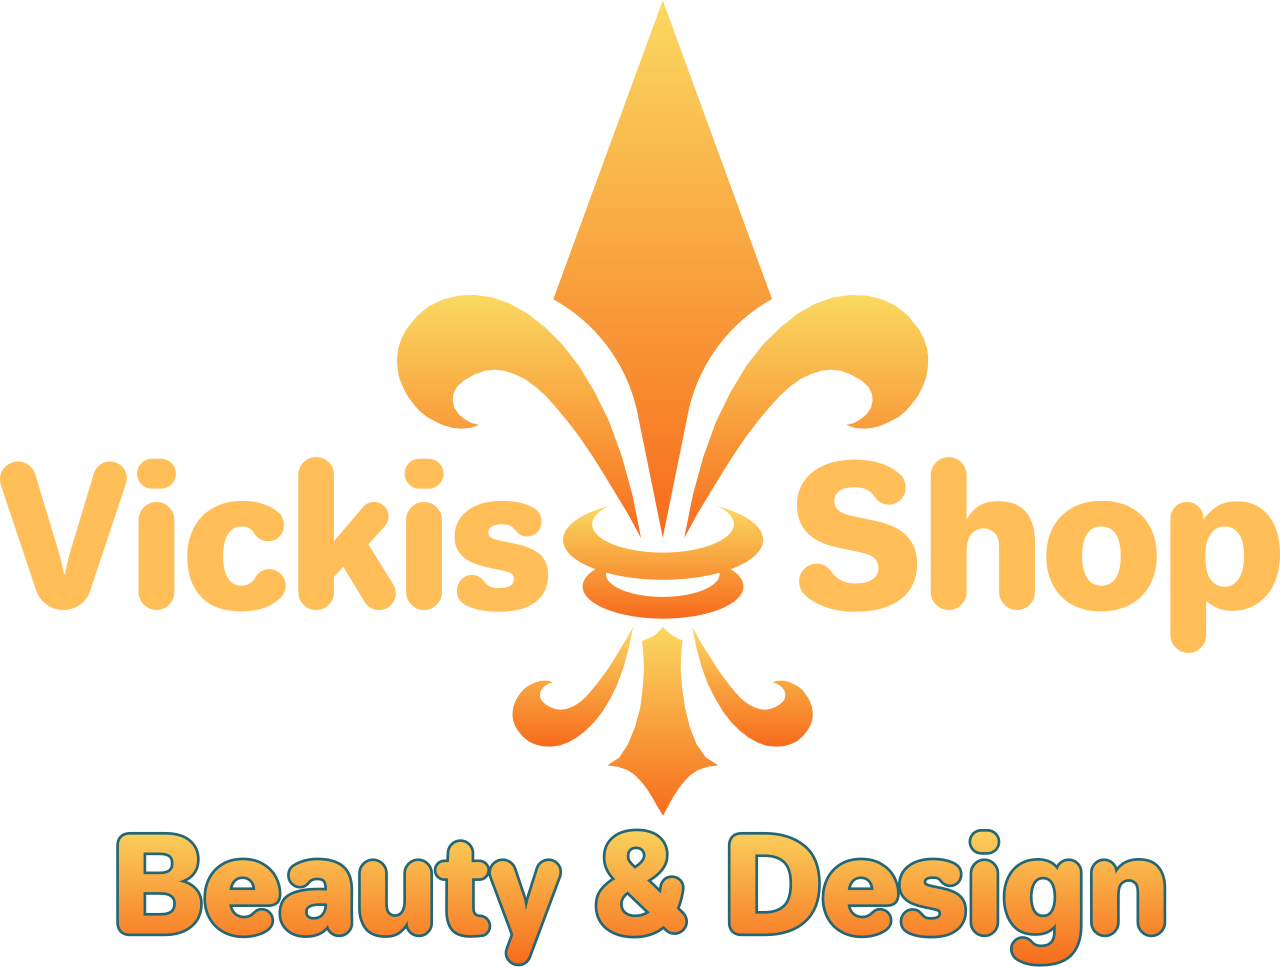 Vickis     Shop's logo